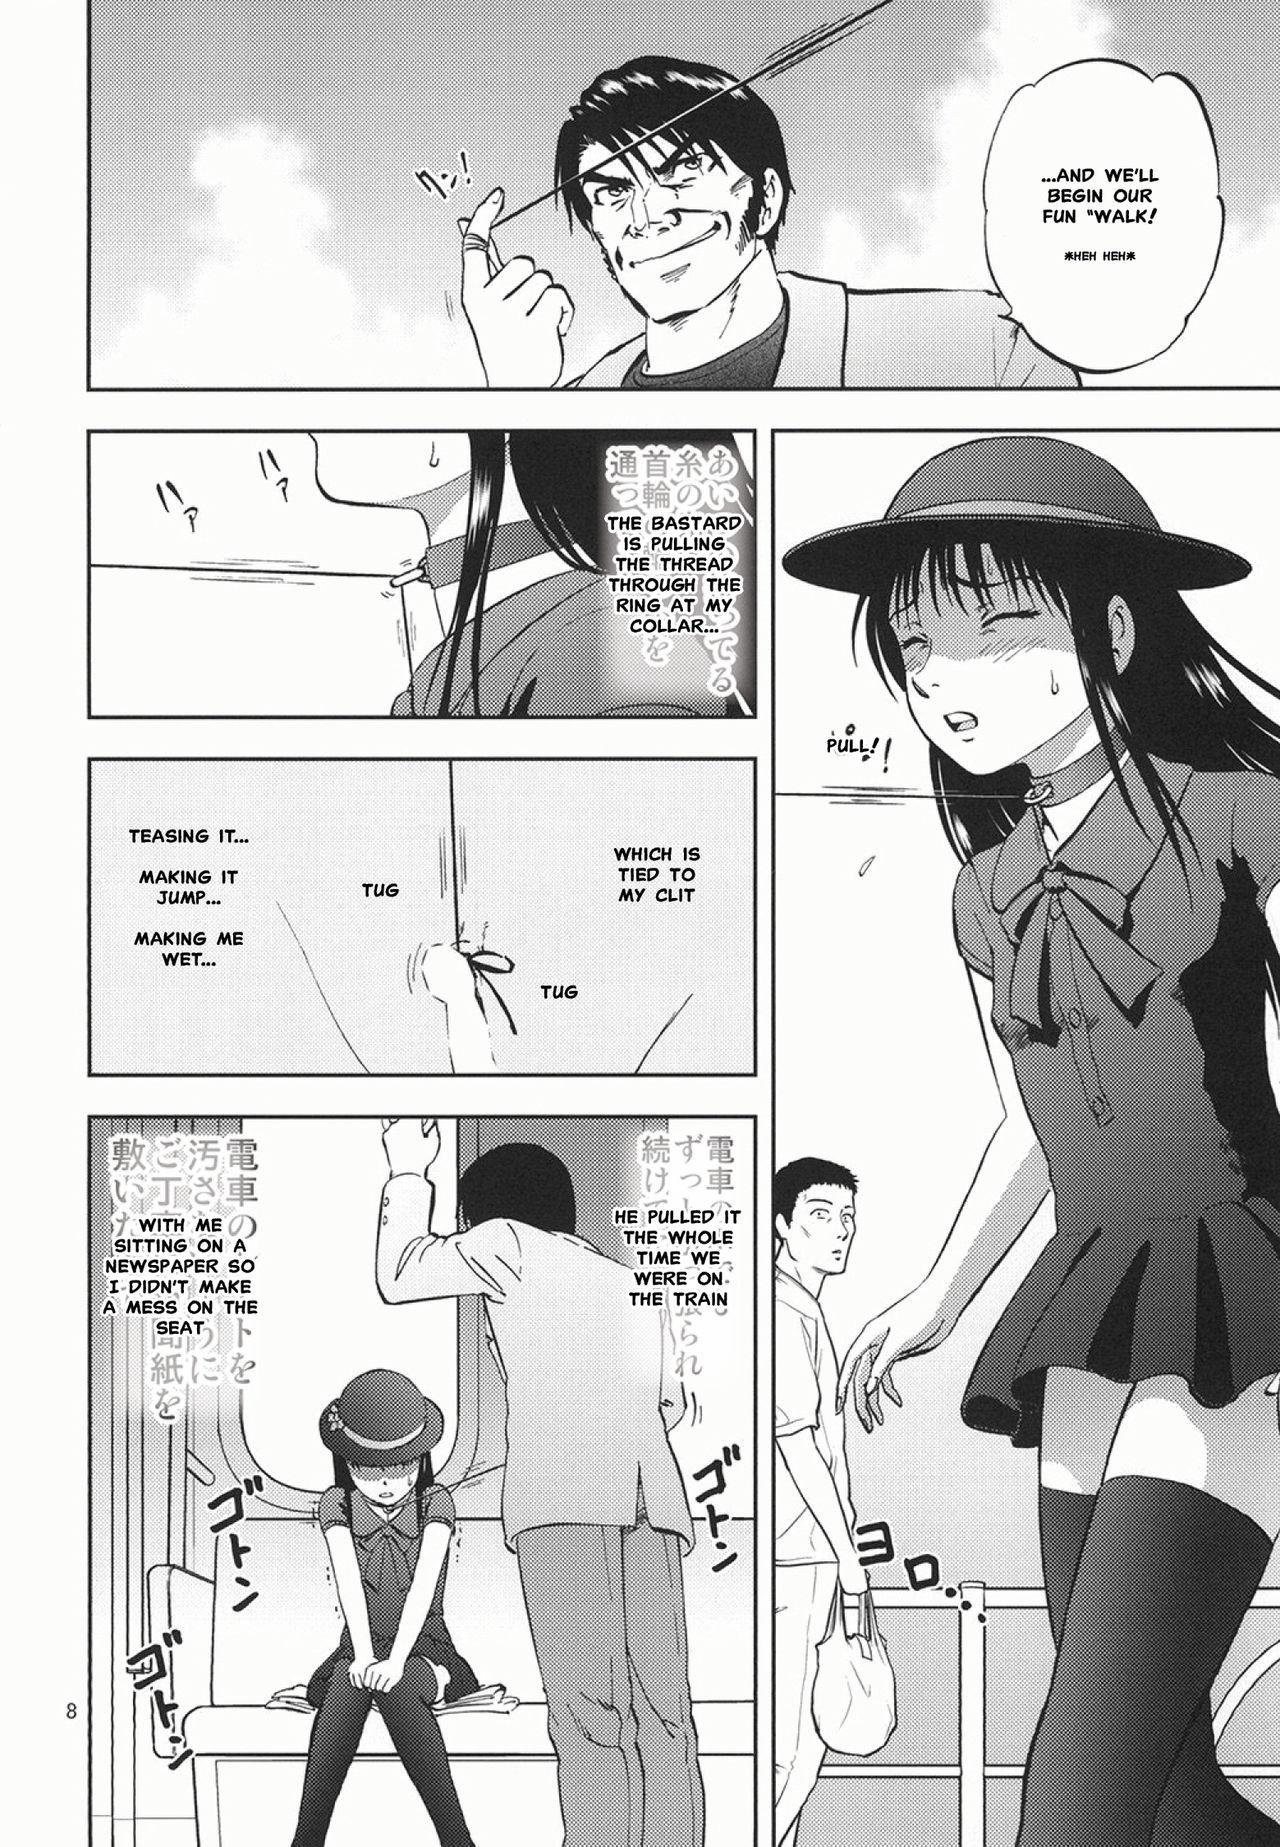 Couch Ura Kuri Hiroi 6 | Picking Chestnuts - Eriko's Story Part 6 Dicks - Page 5